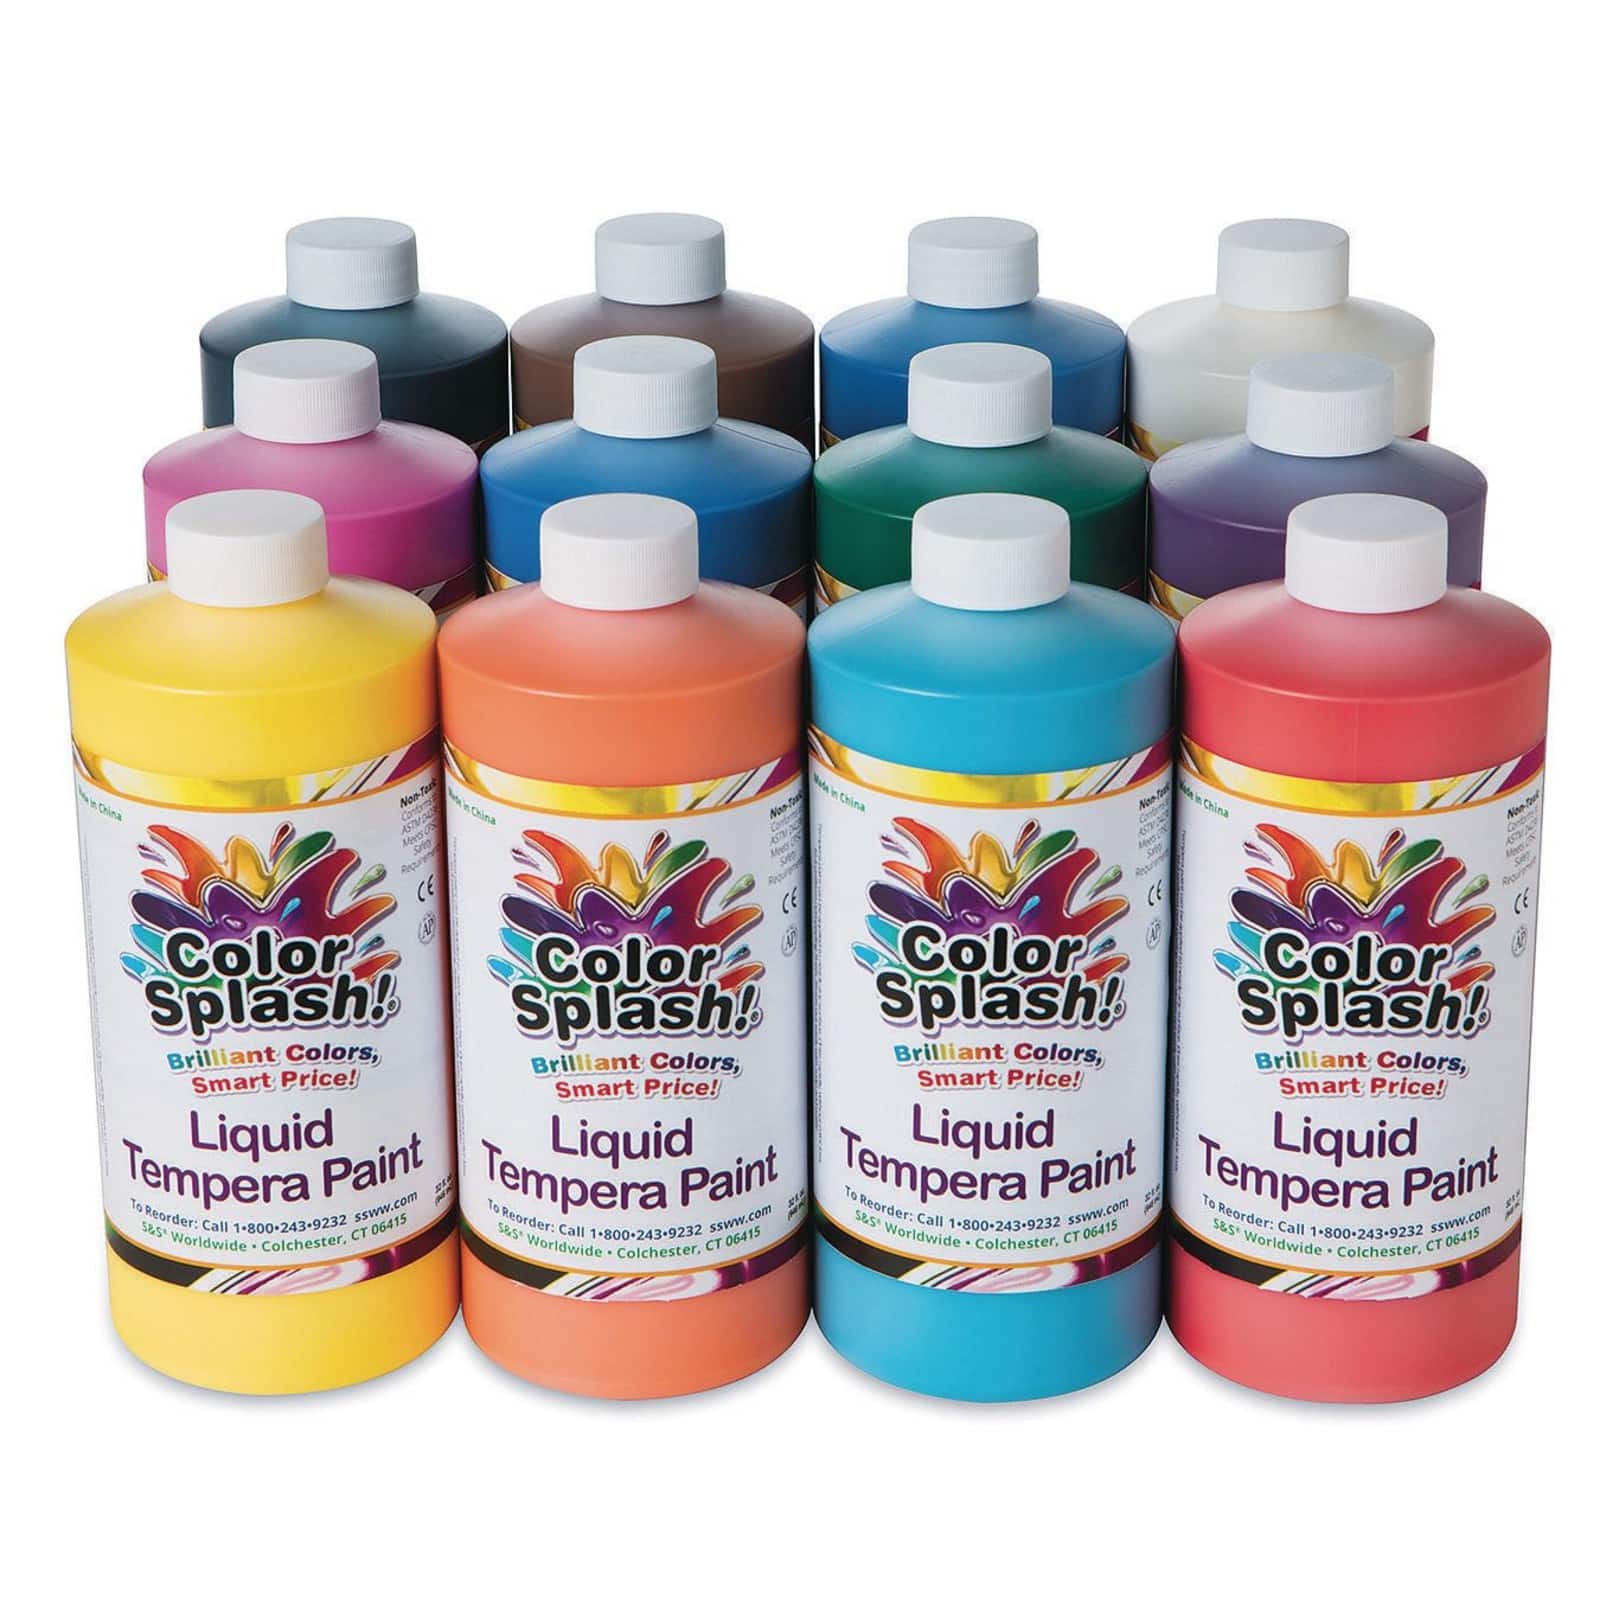 Lakeshore Fully Washable Liquid Tempera Paint - Pint - Set of 10 Colors